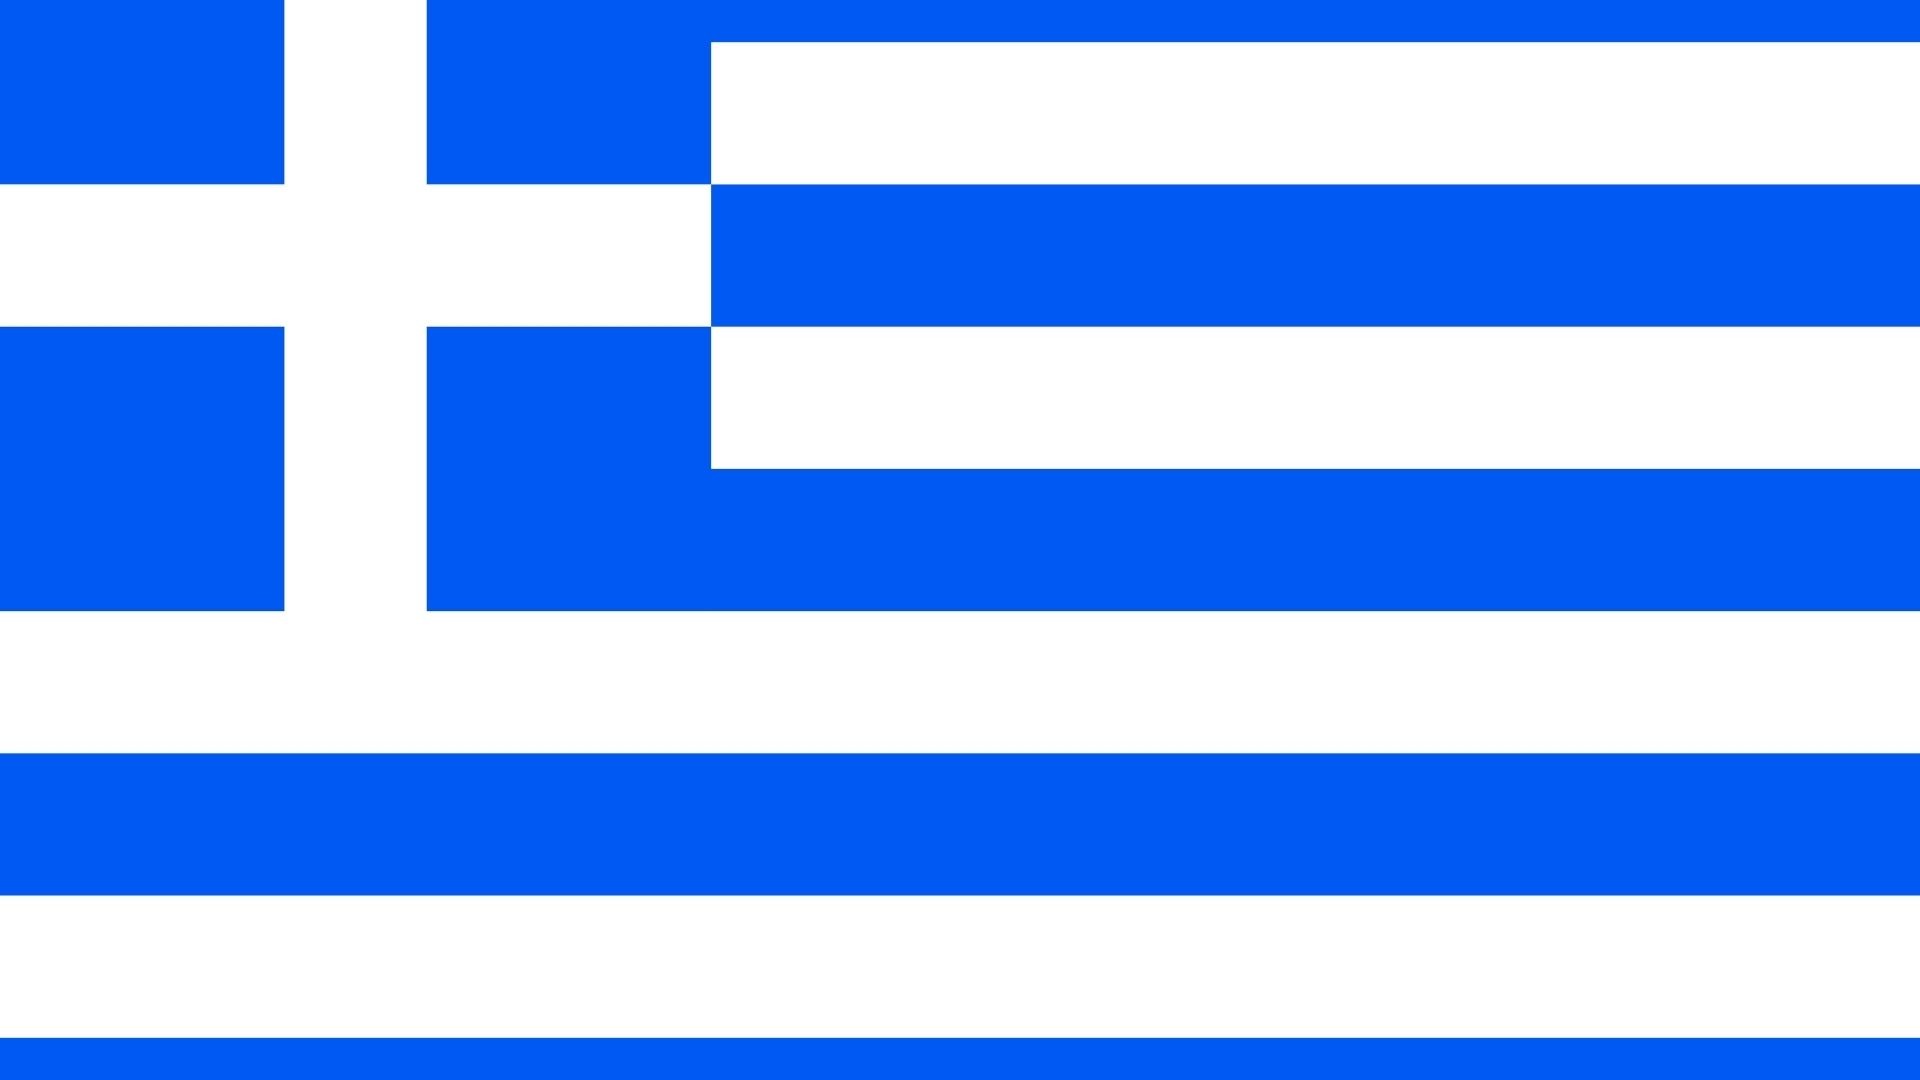 Yunanistan Vize Merkezi Manisa